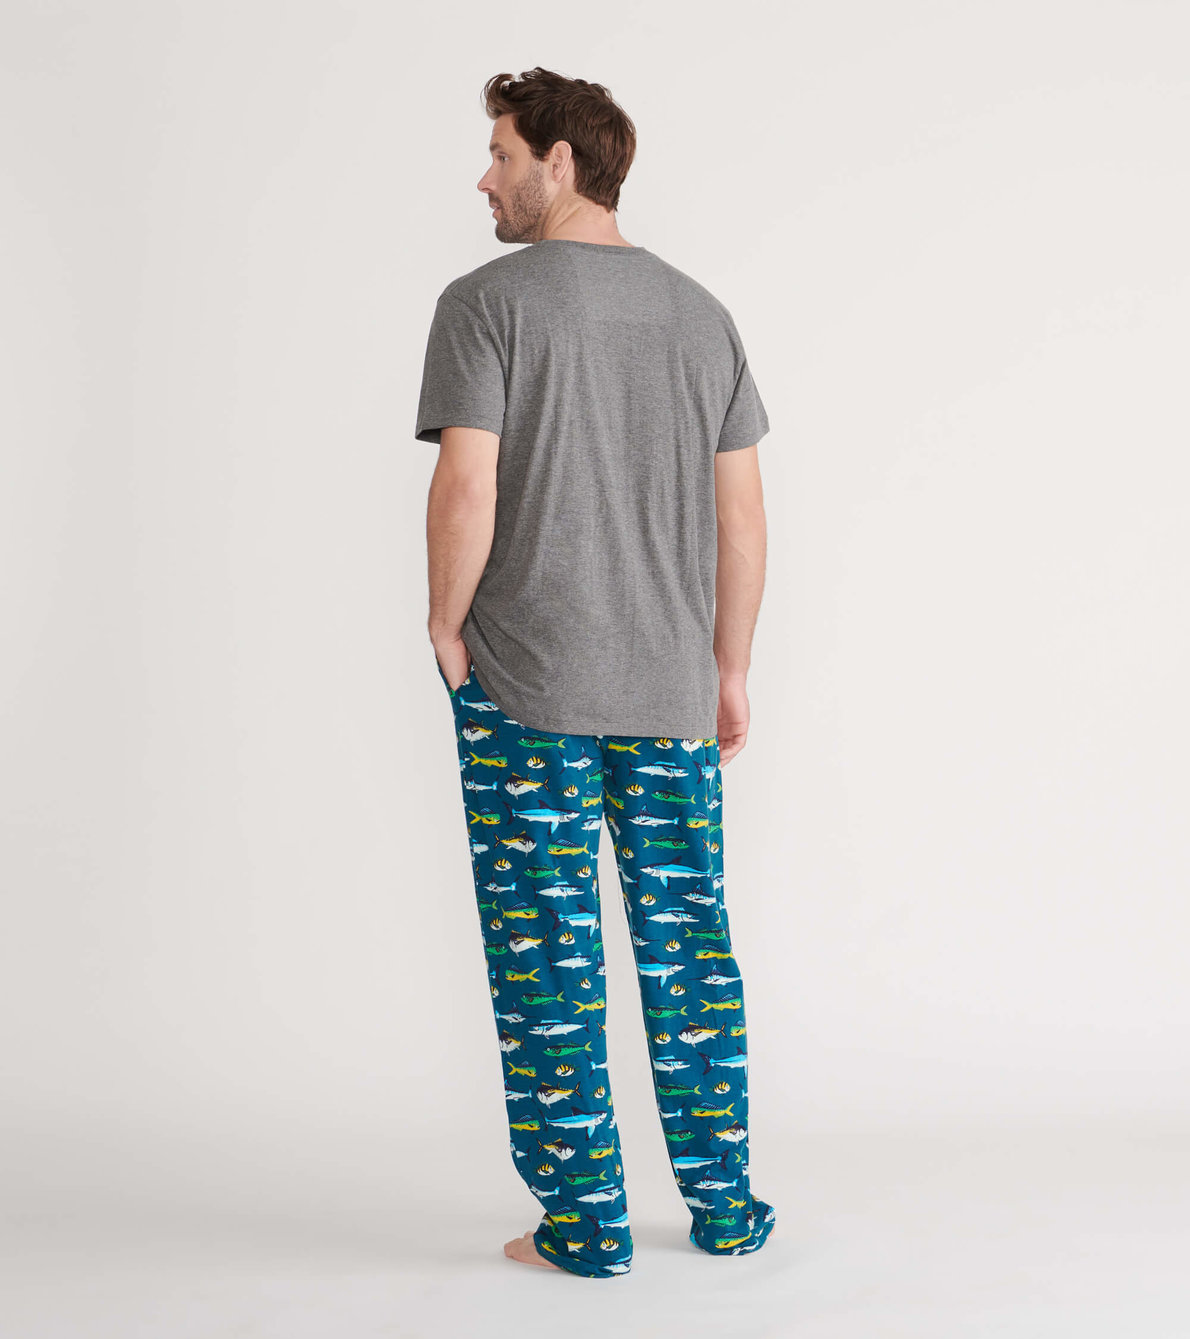 View larger image of Game Fish Men's Tee and Pants Pajama Separates